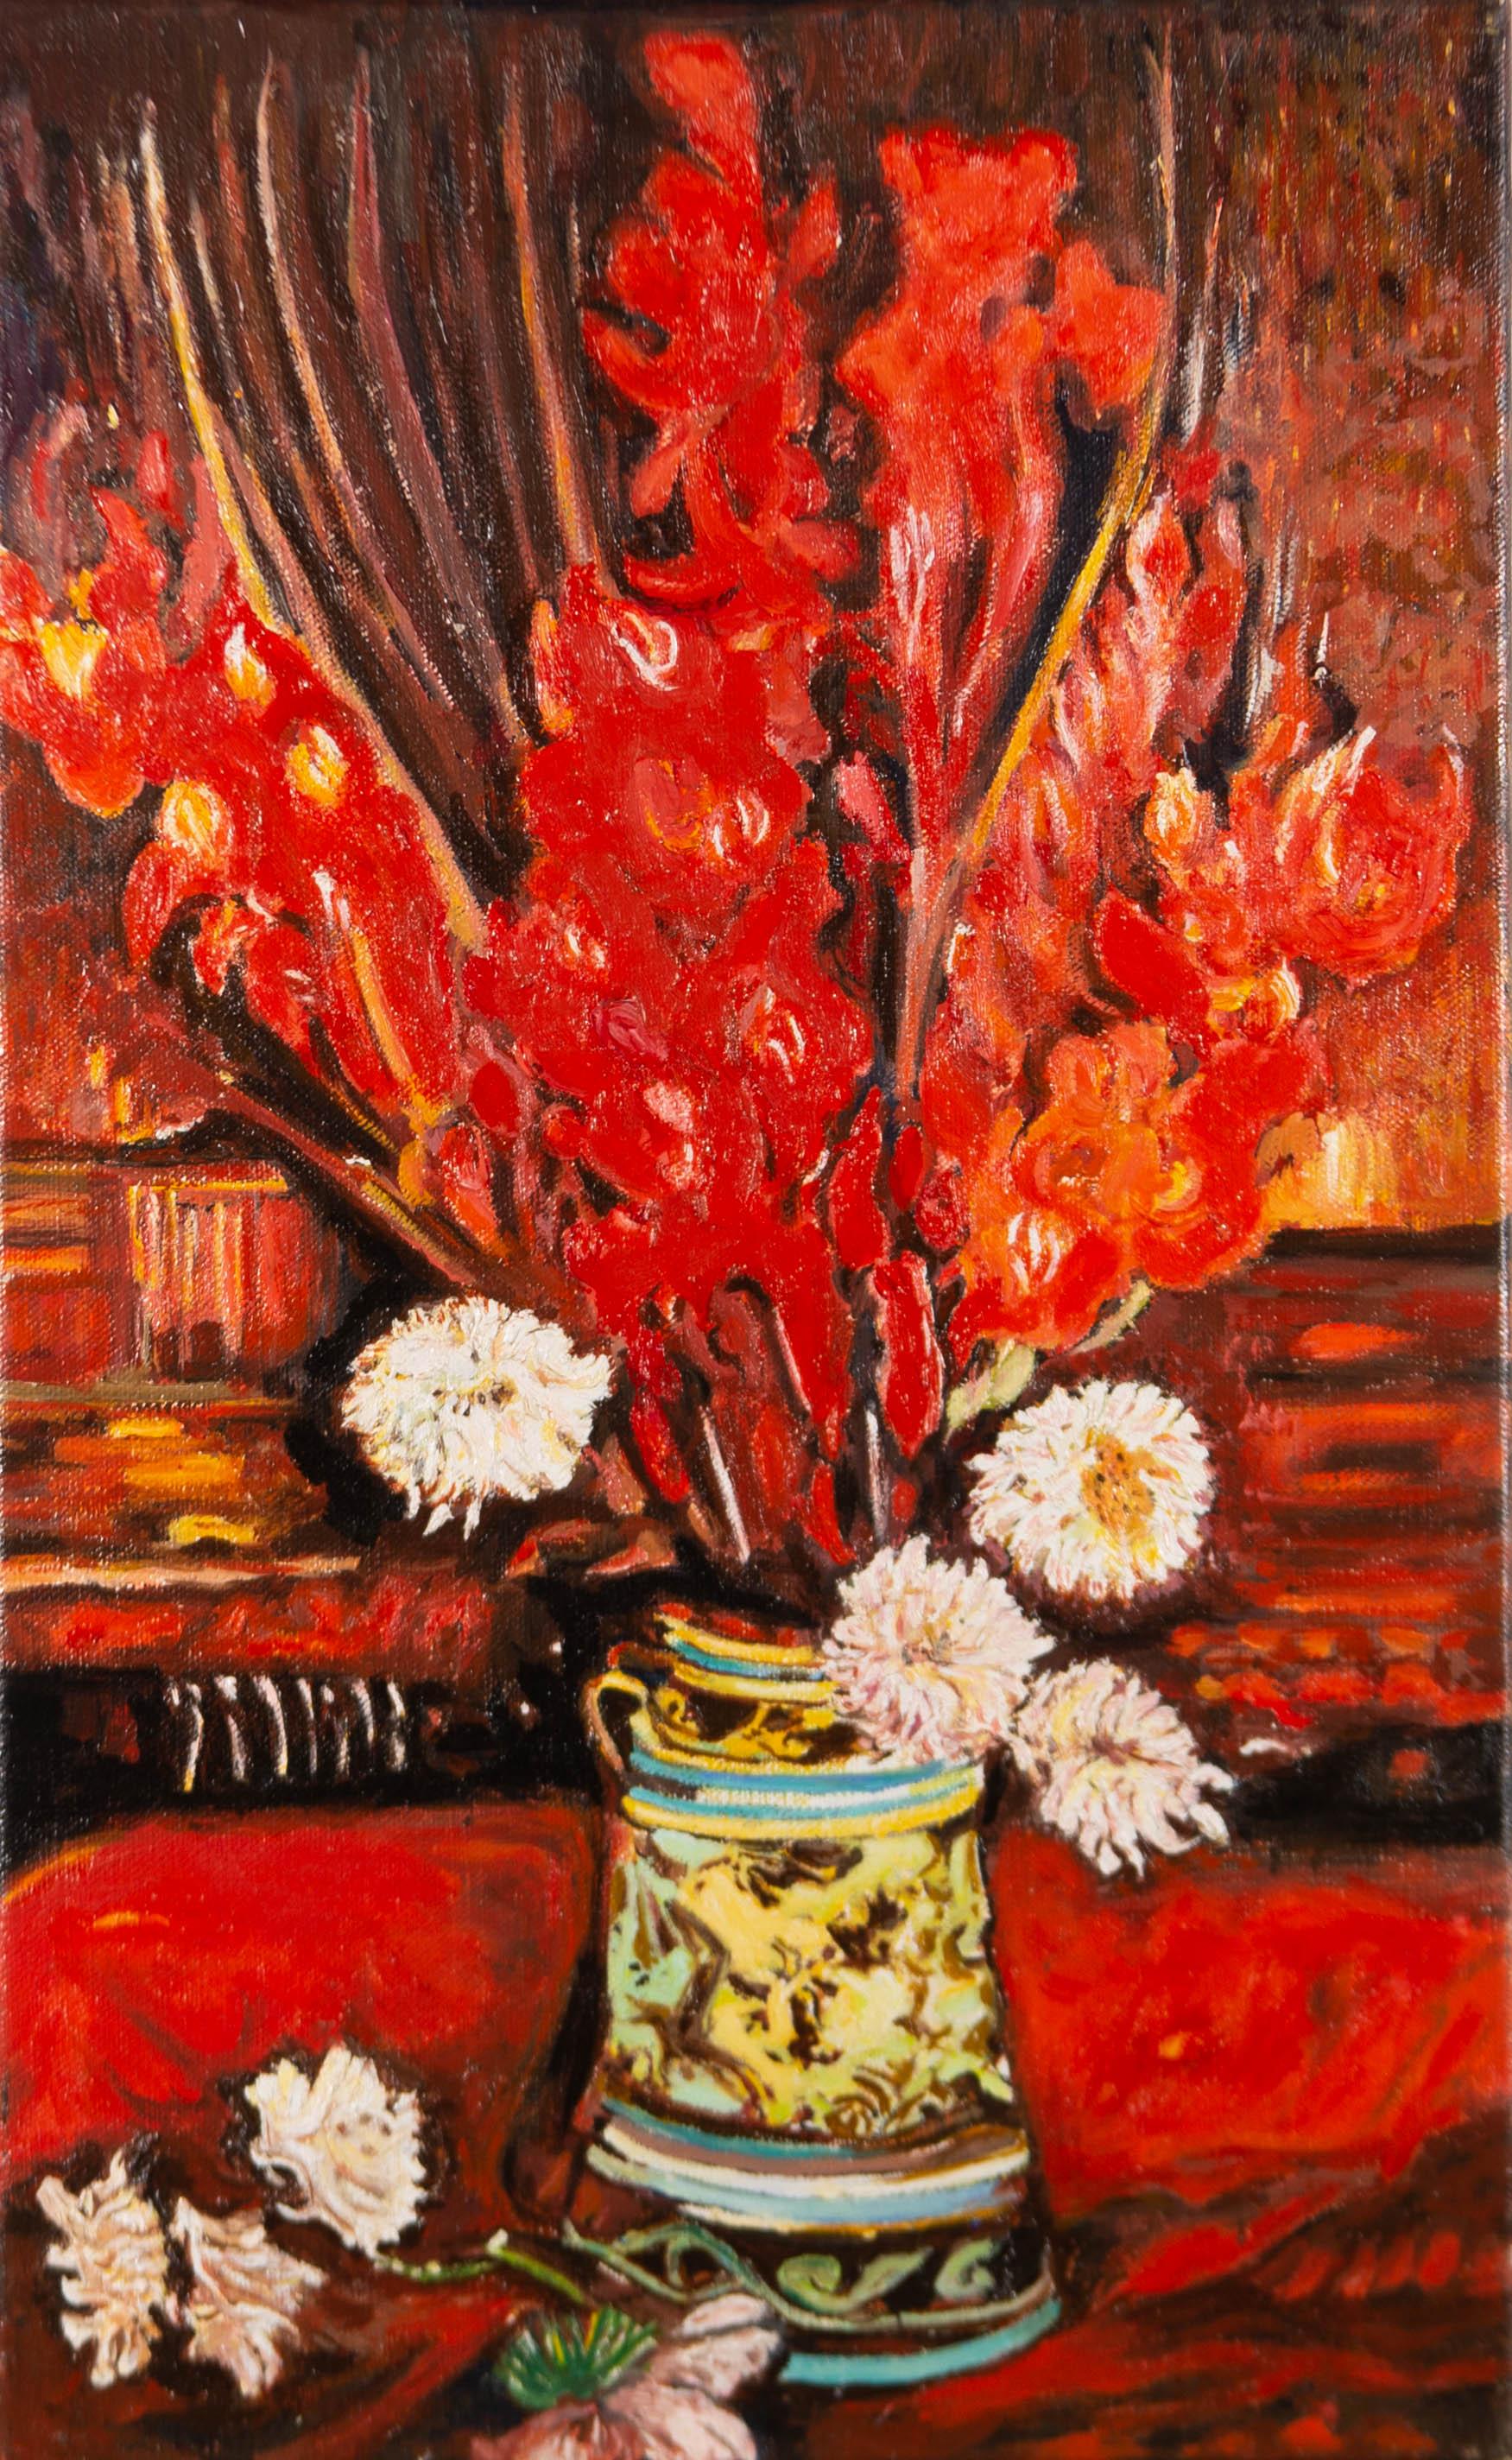 Lewis MacLeod d'après Van Gough - 2003 Huile, vase avec Gladioli rouge - Rouge Still-Life Painting par Lewis MacLeod After Van Gough